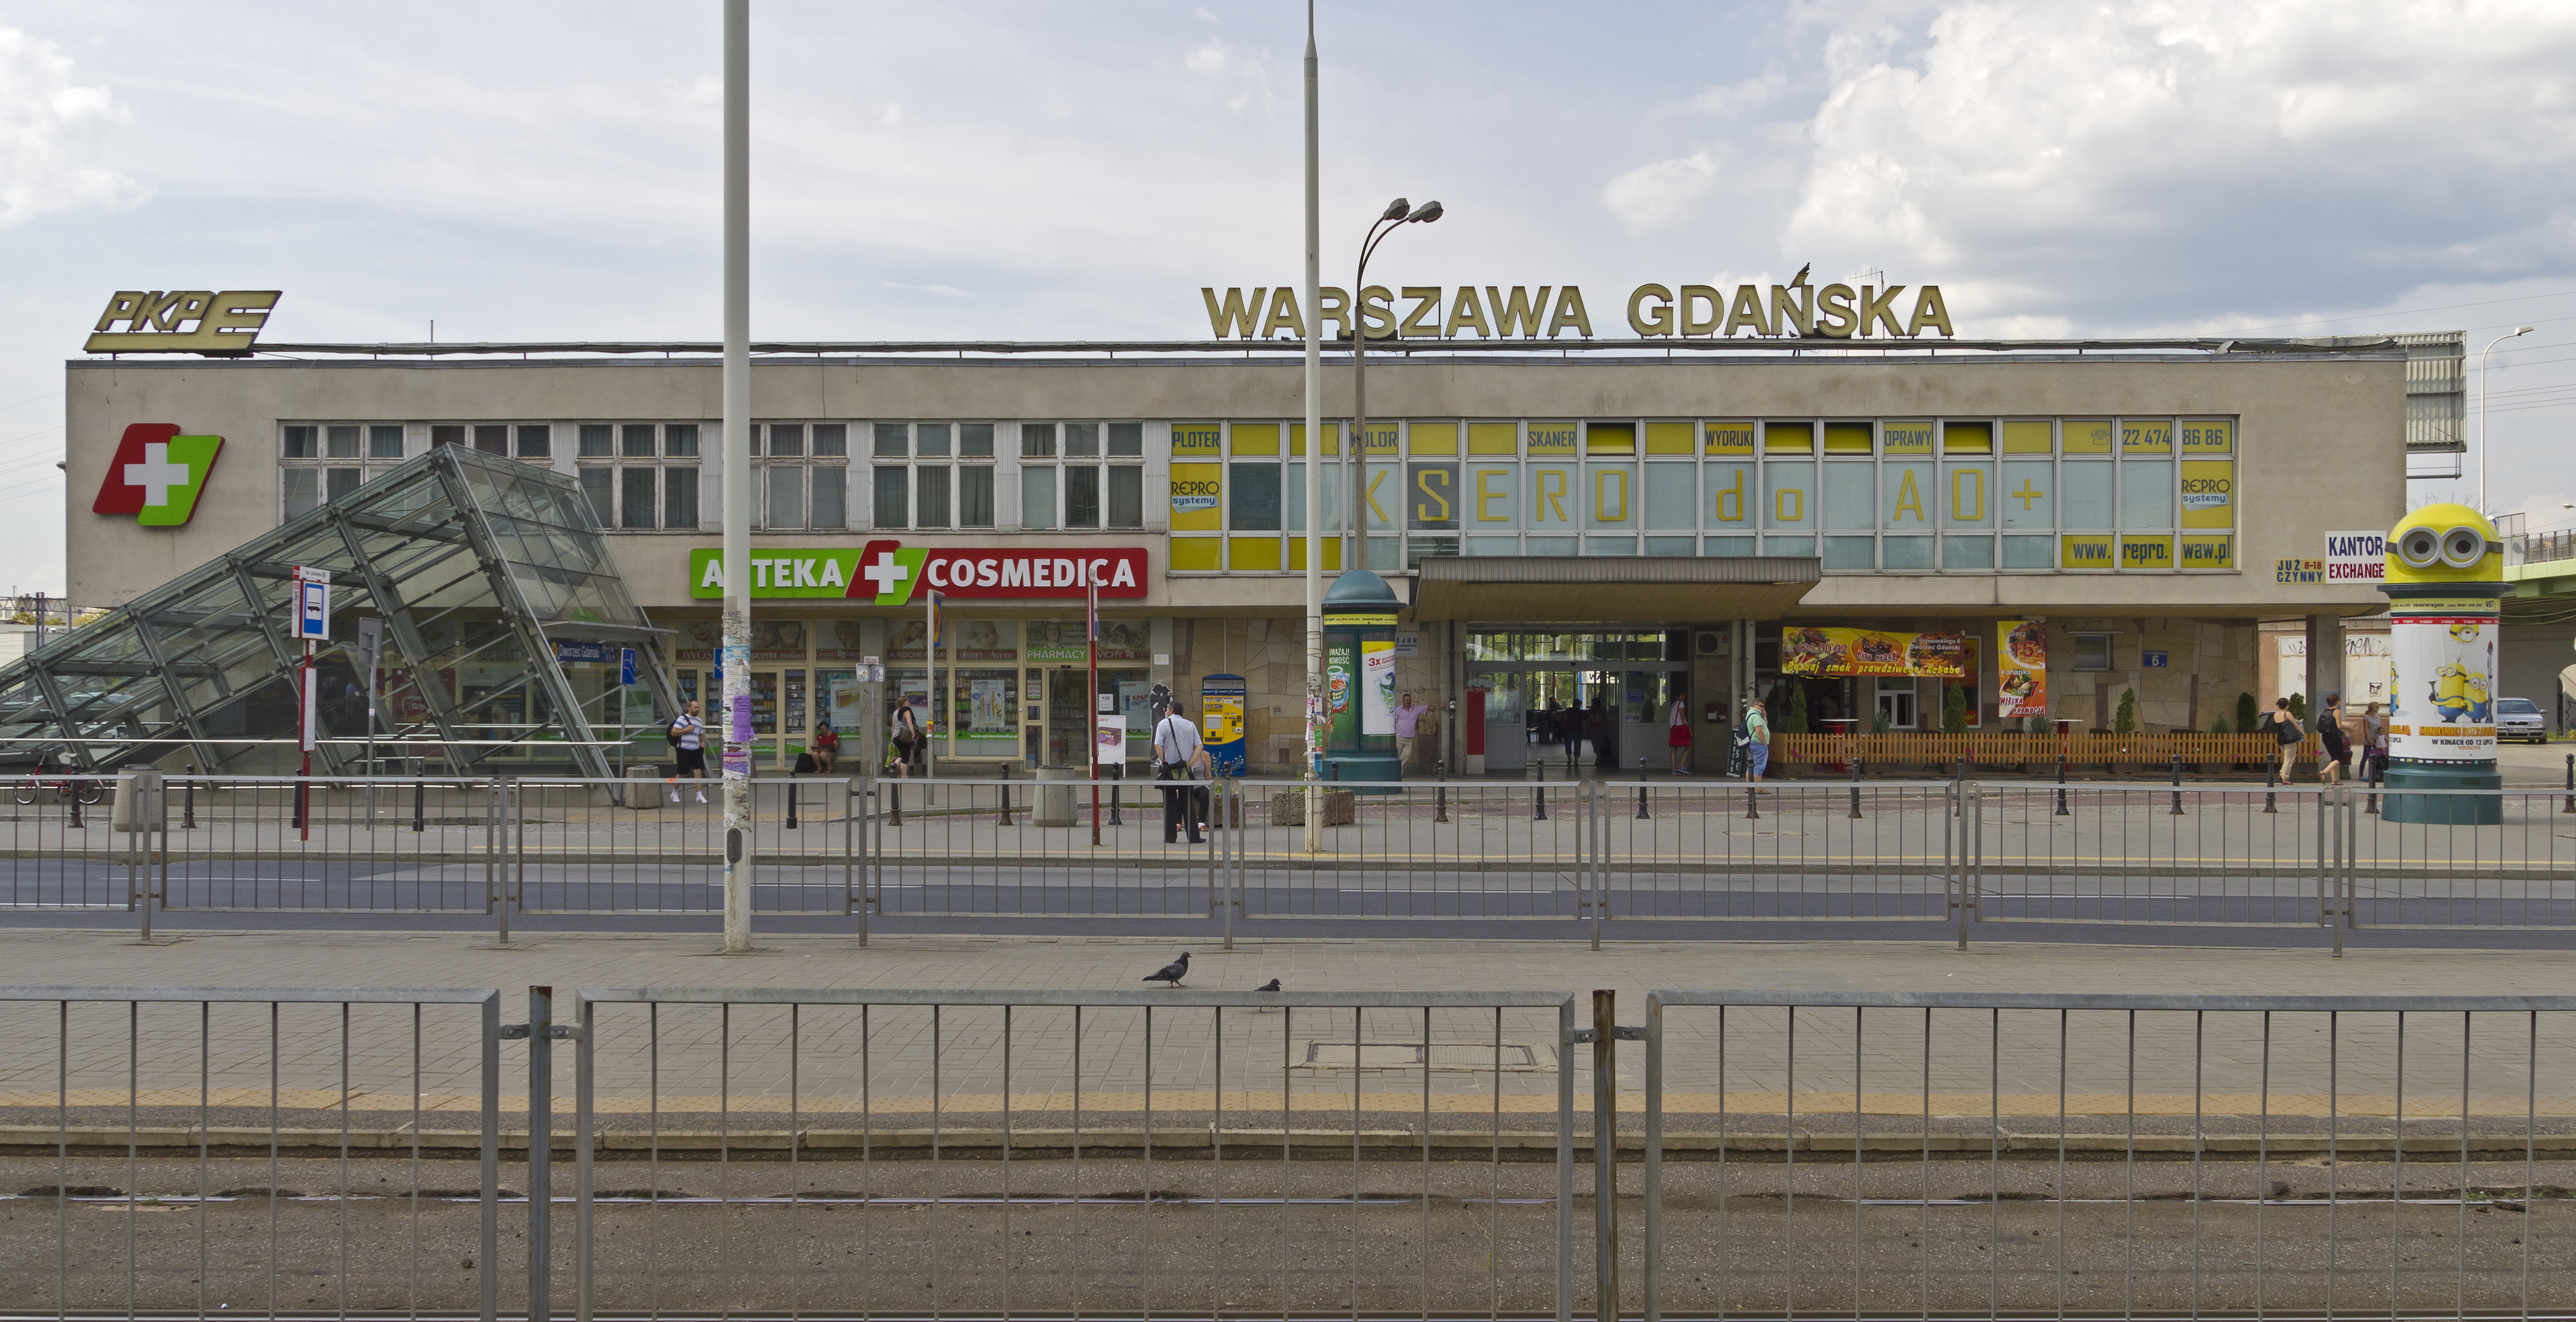 Warsaw 07-13 img36 Gdansk Station